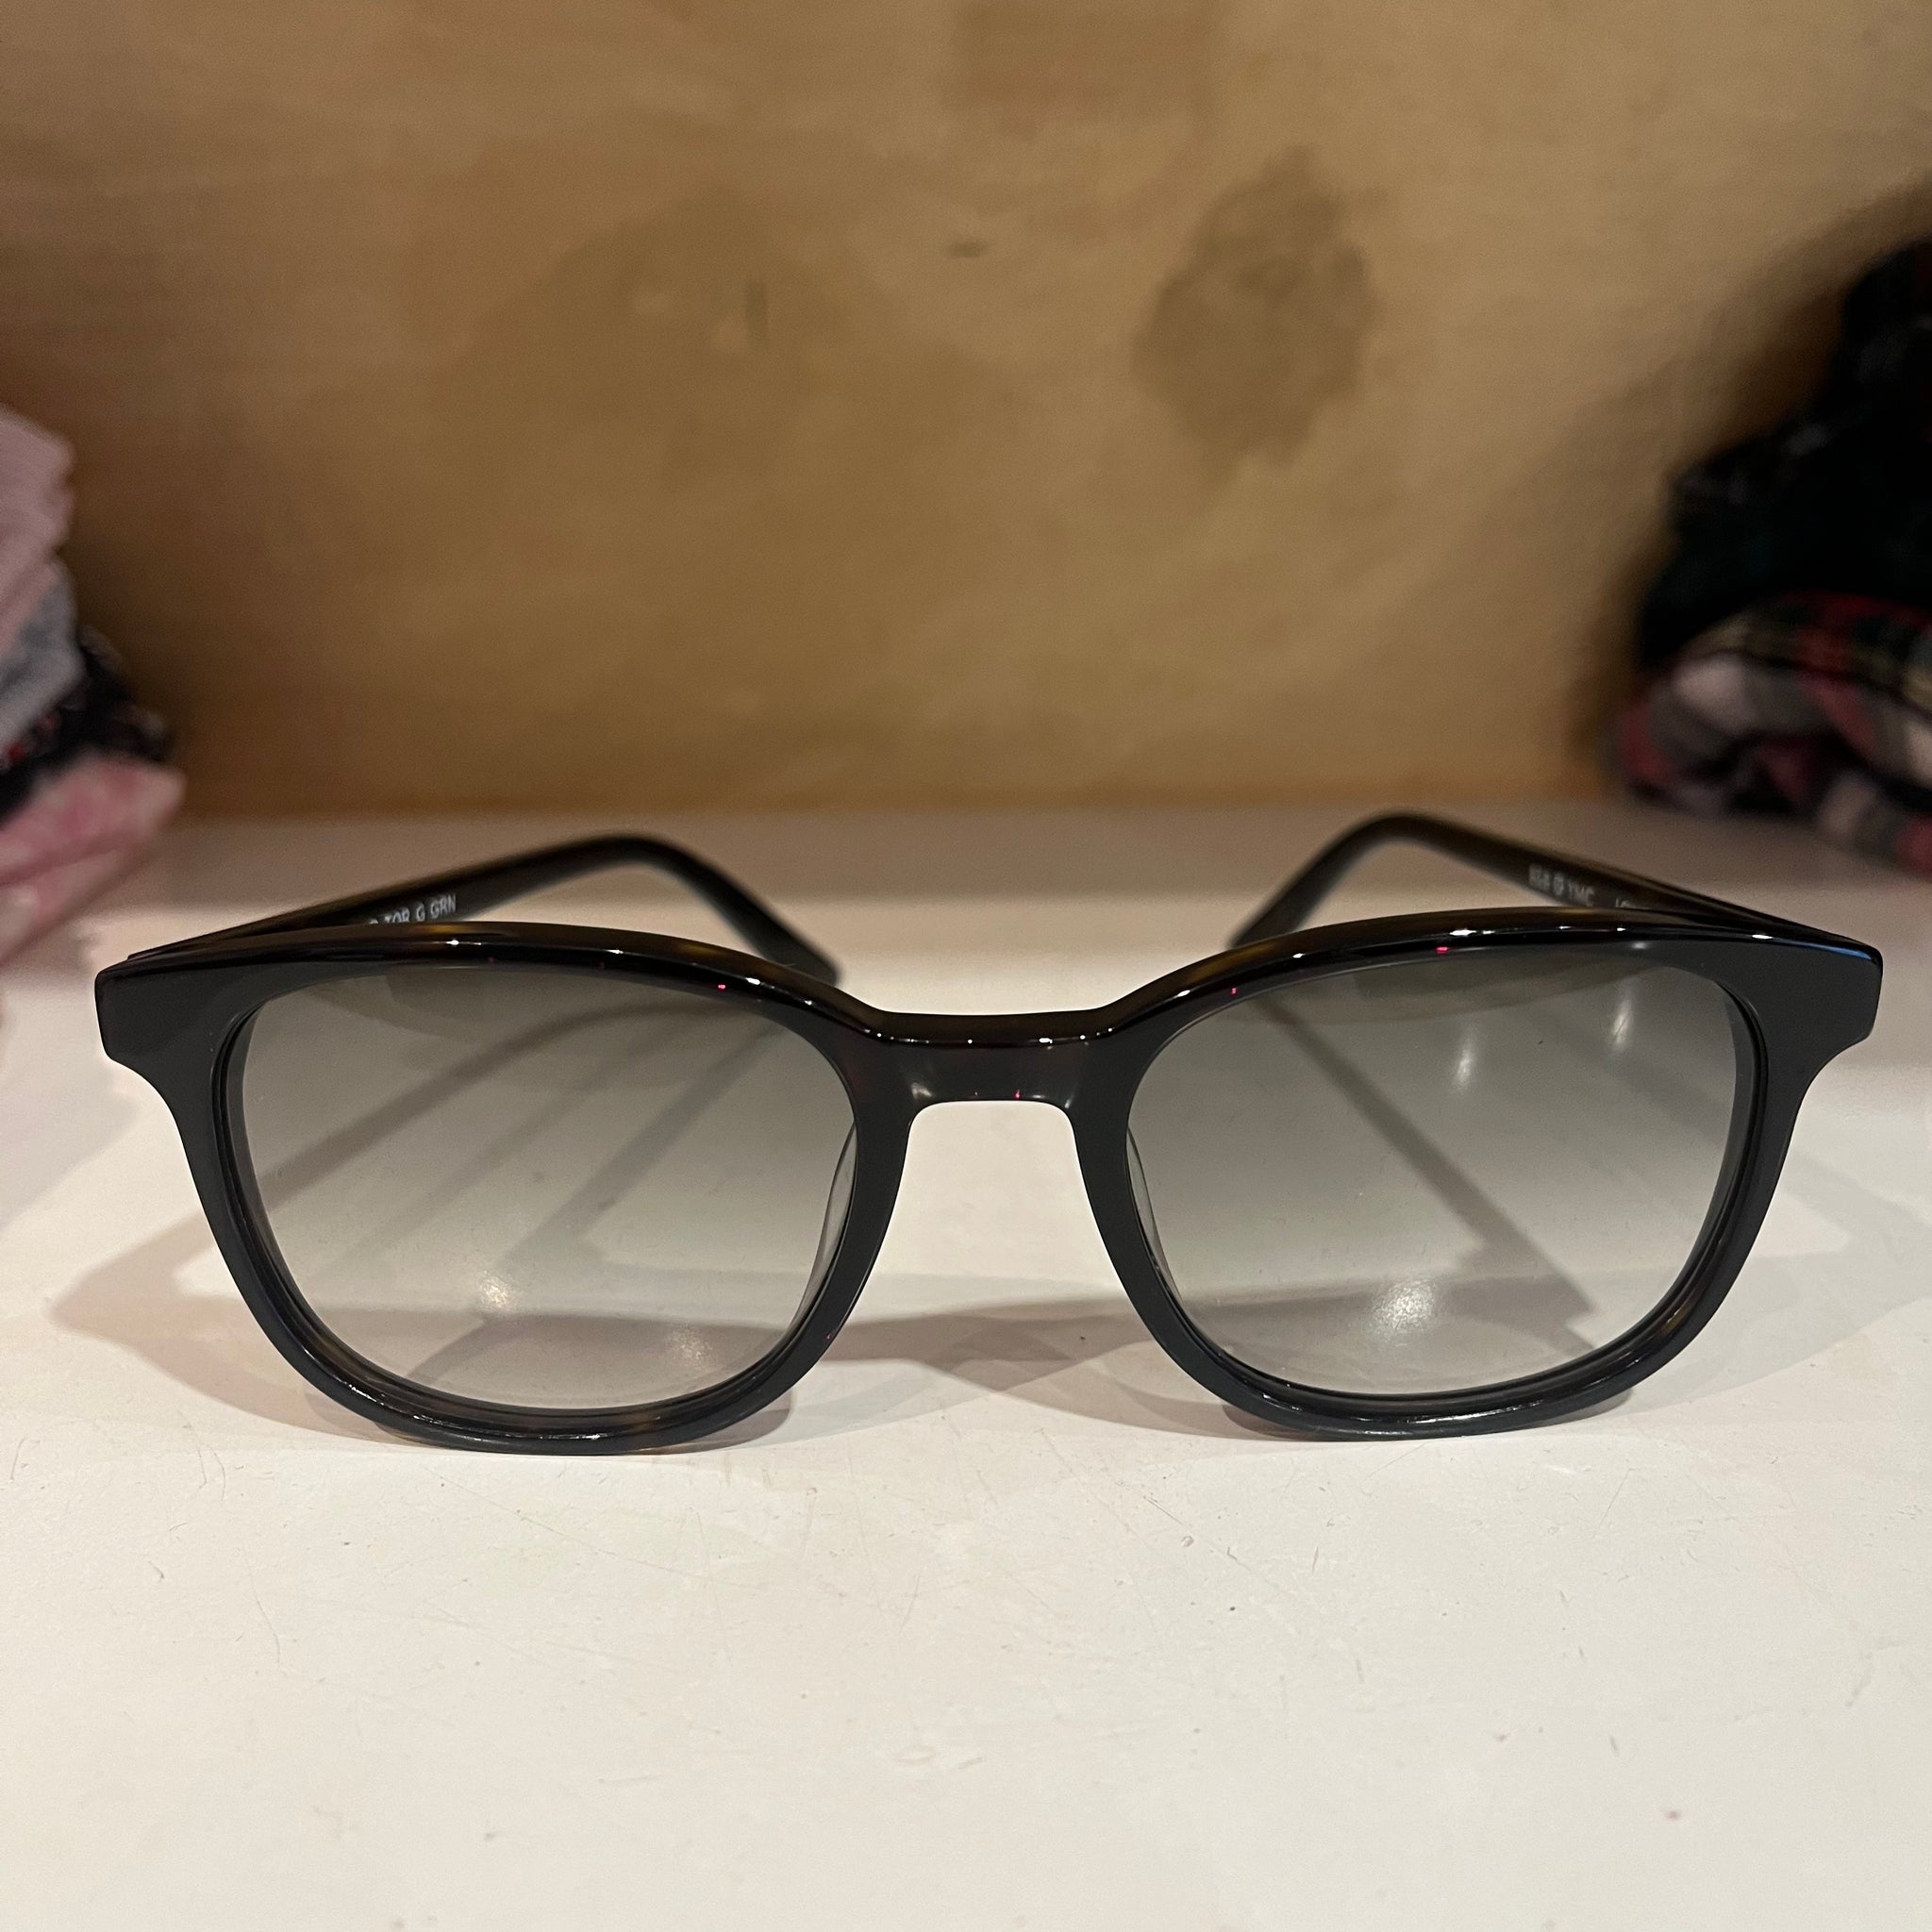 YMC - 'Hakon' Sunglasses - Biodegradable Acetate - Crystal Tortoiseshell, Graduated Green Lens